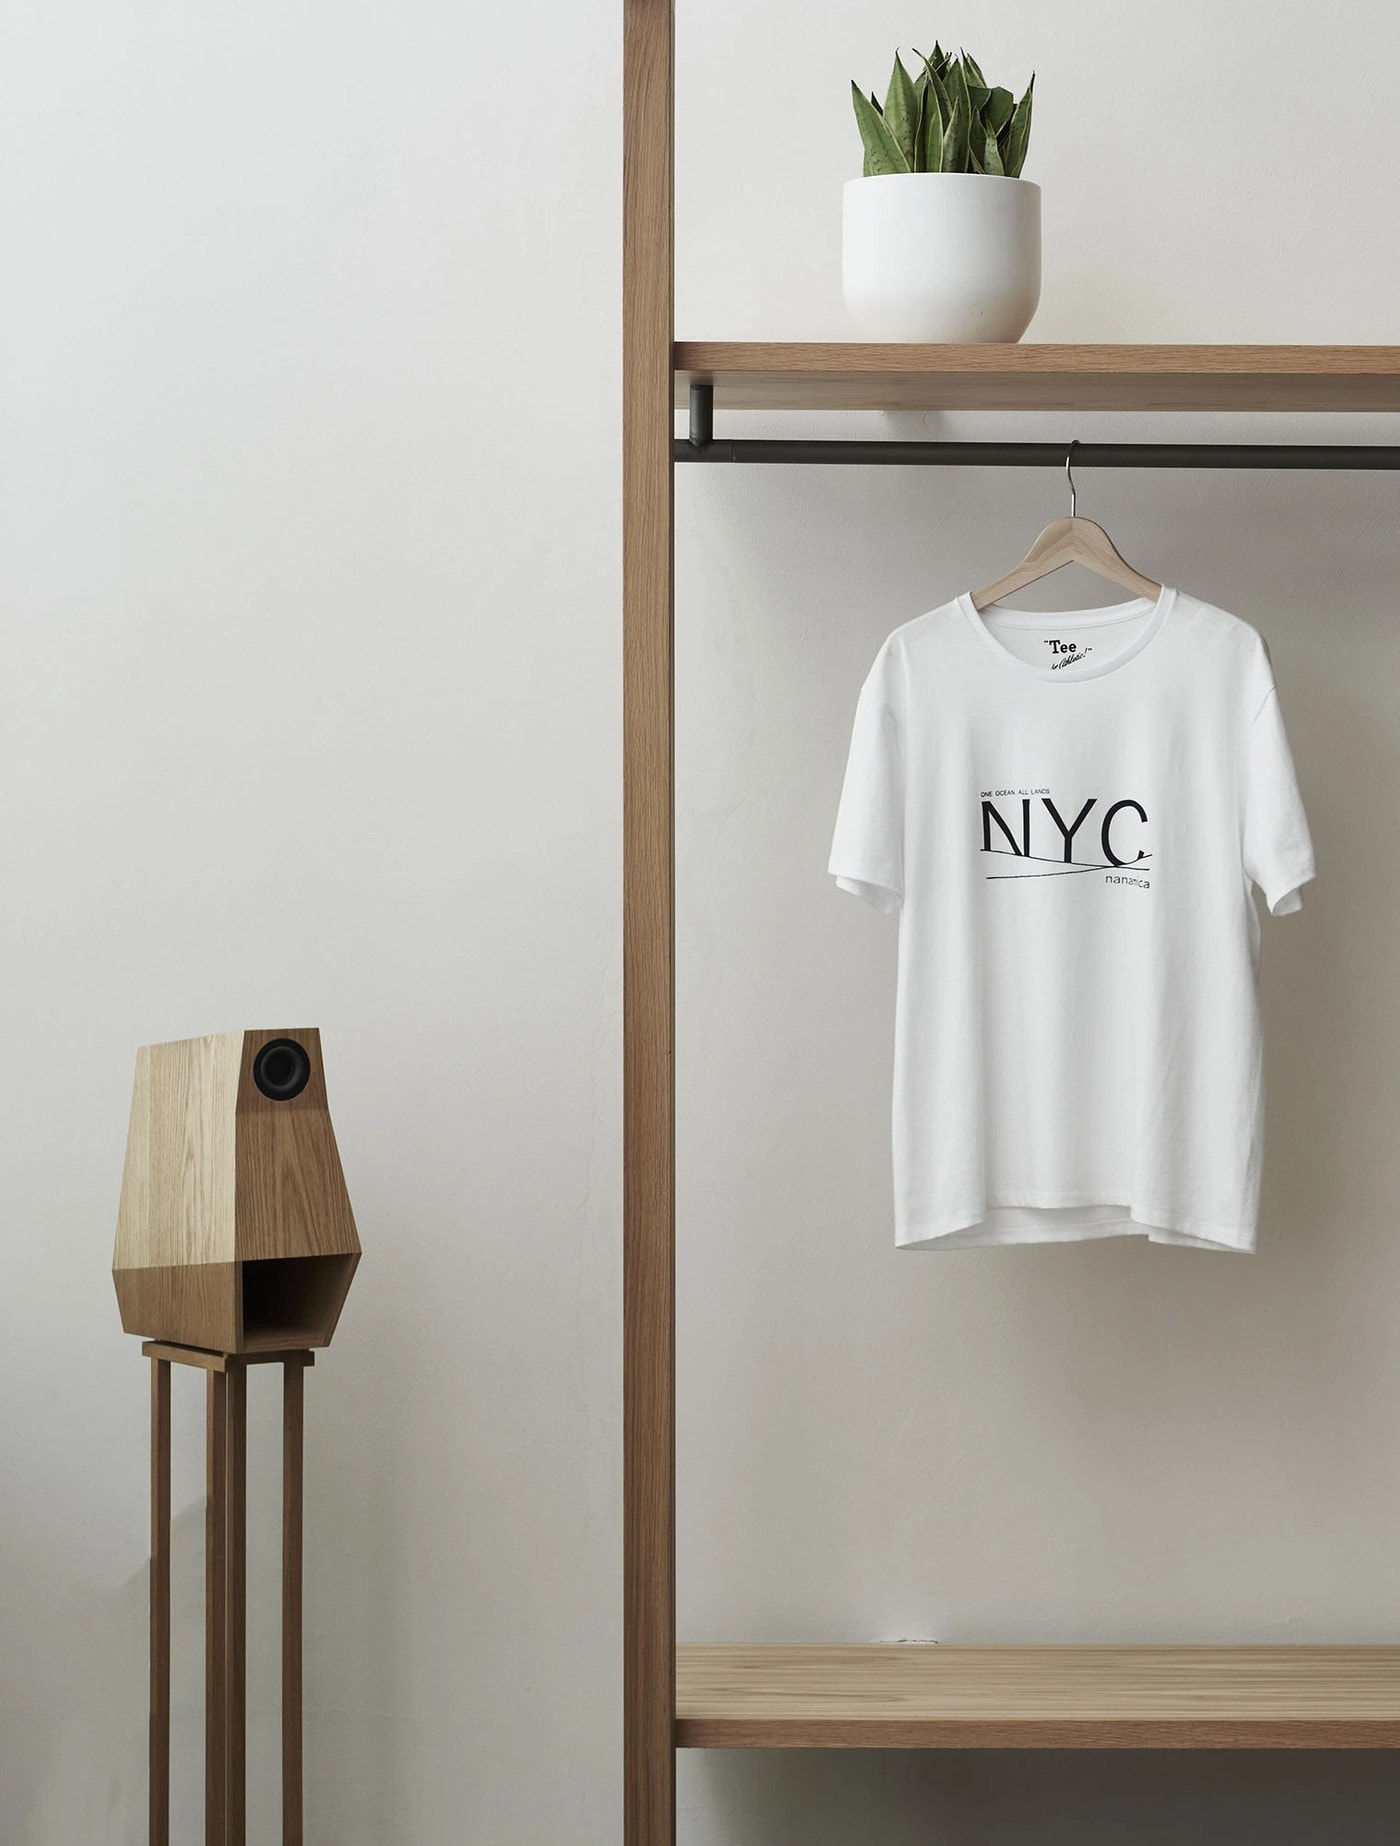 nanamica 於美國紐約正式開設品牌首間店舖